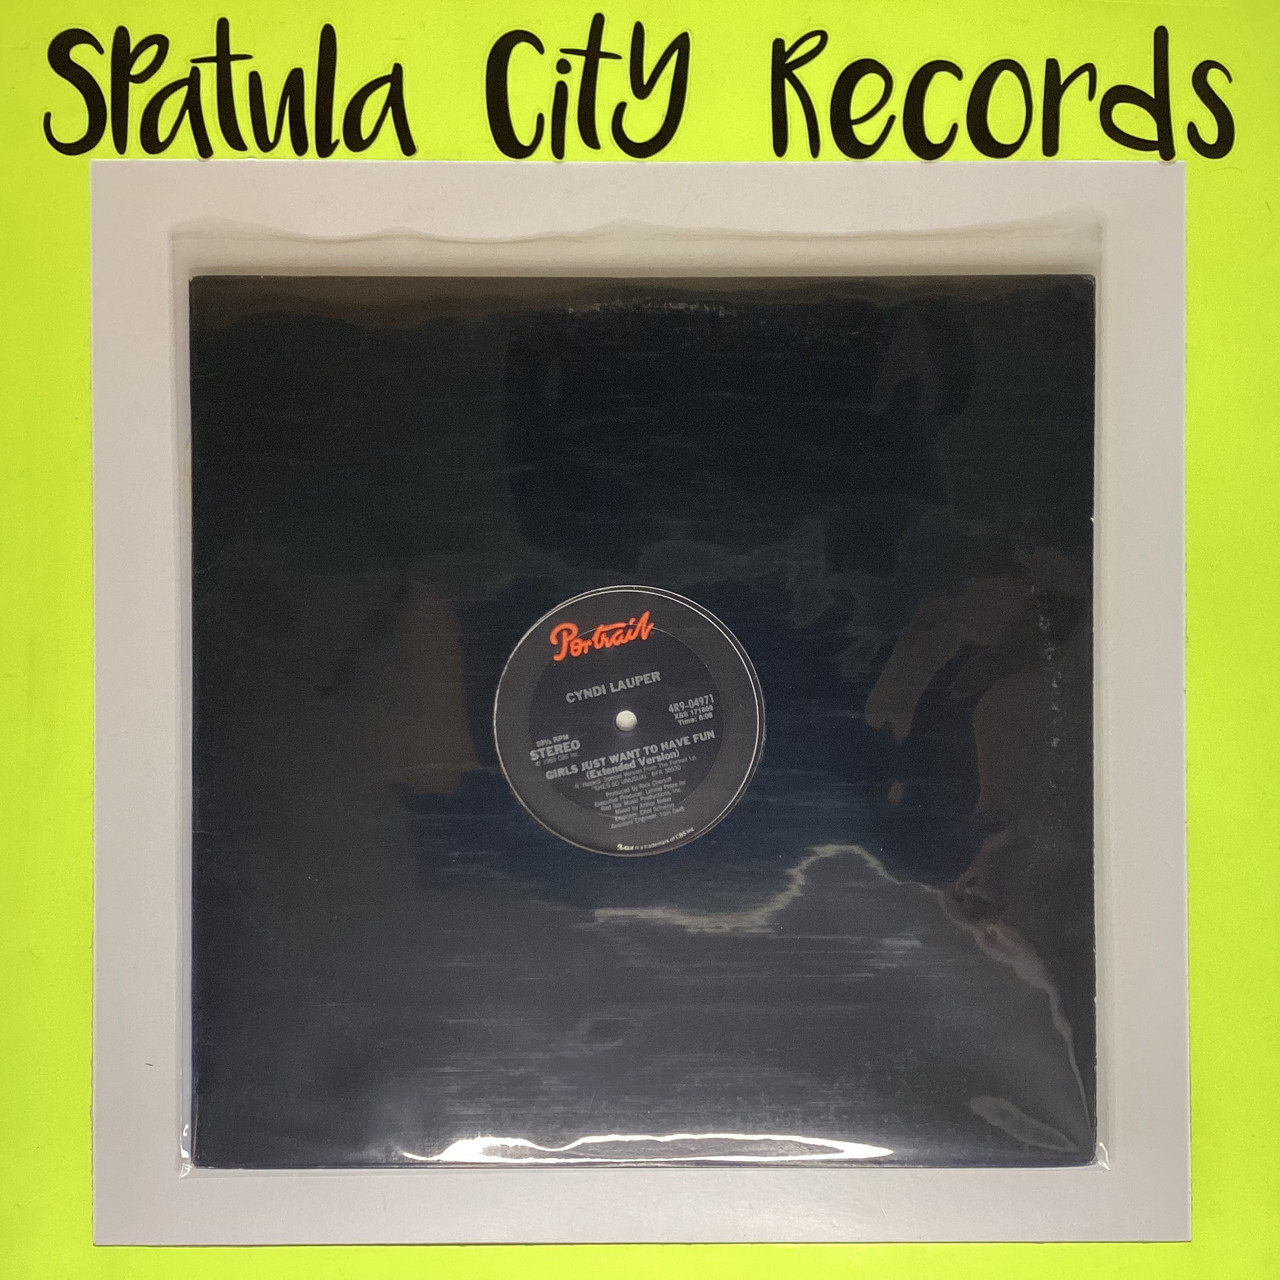 Cyndi Lauper - Girls Just Want To Have Fun - 12" single - vinyl record LP